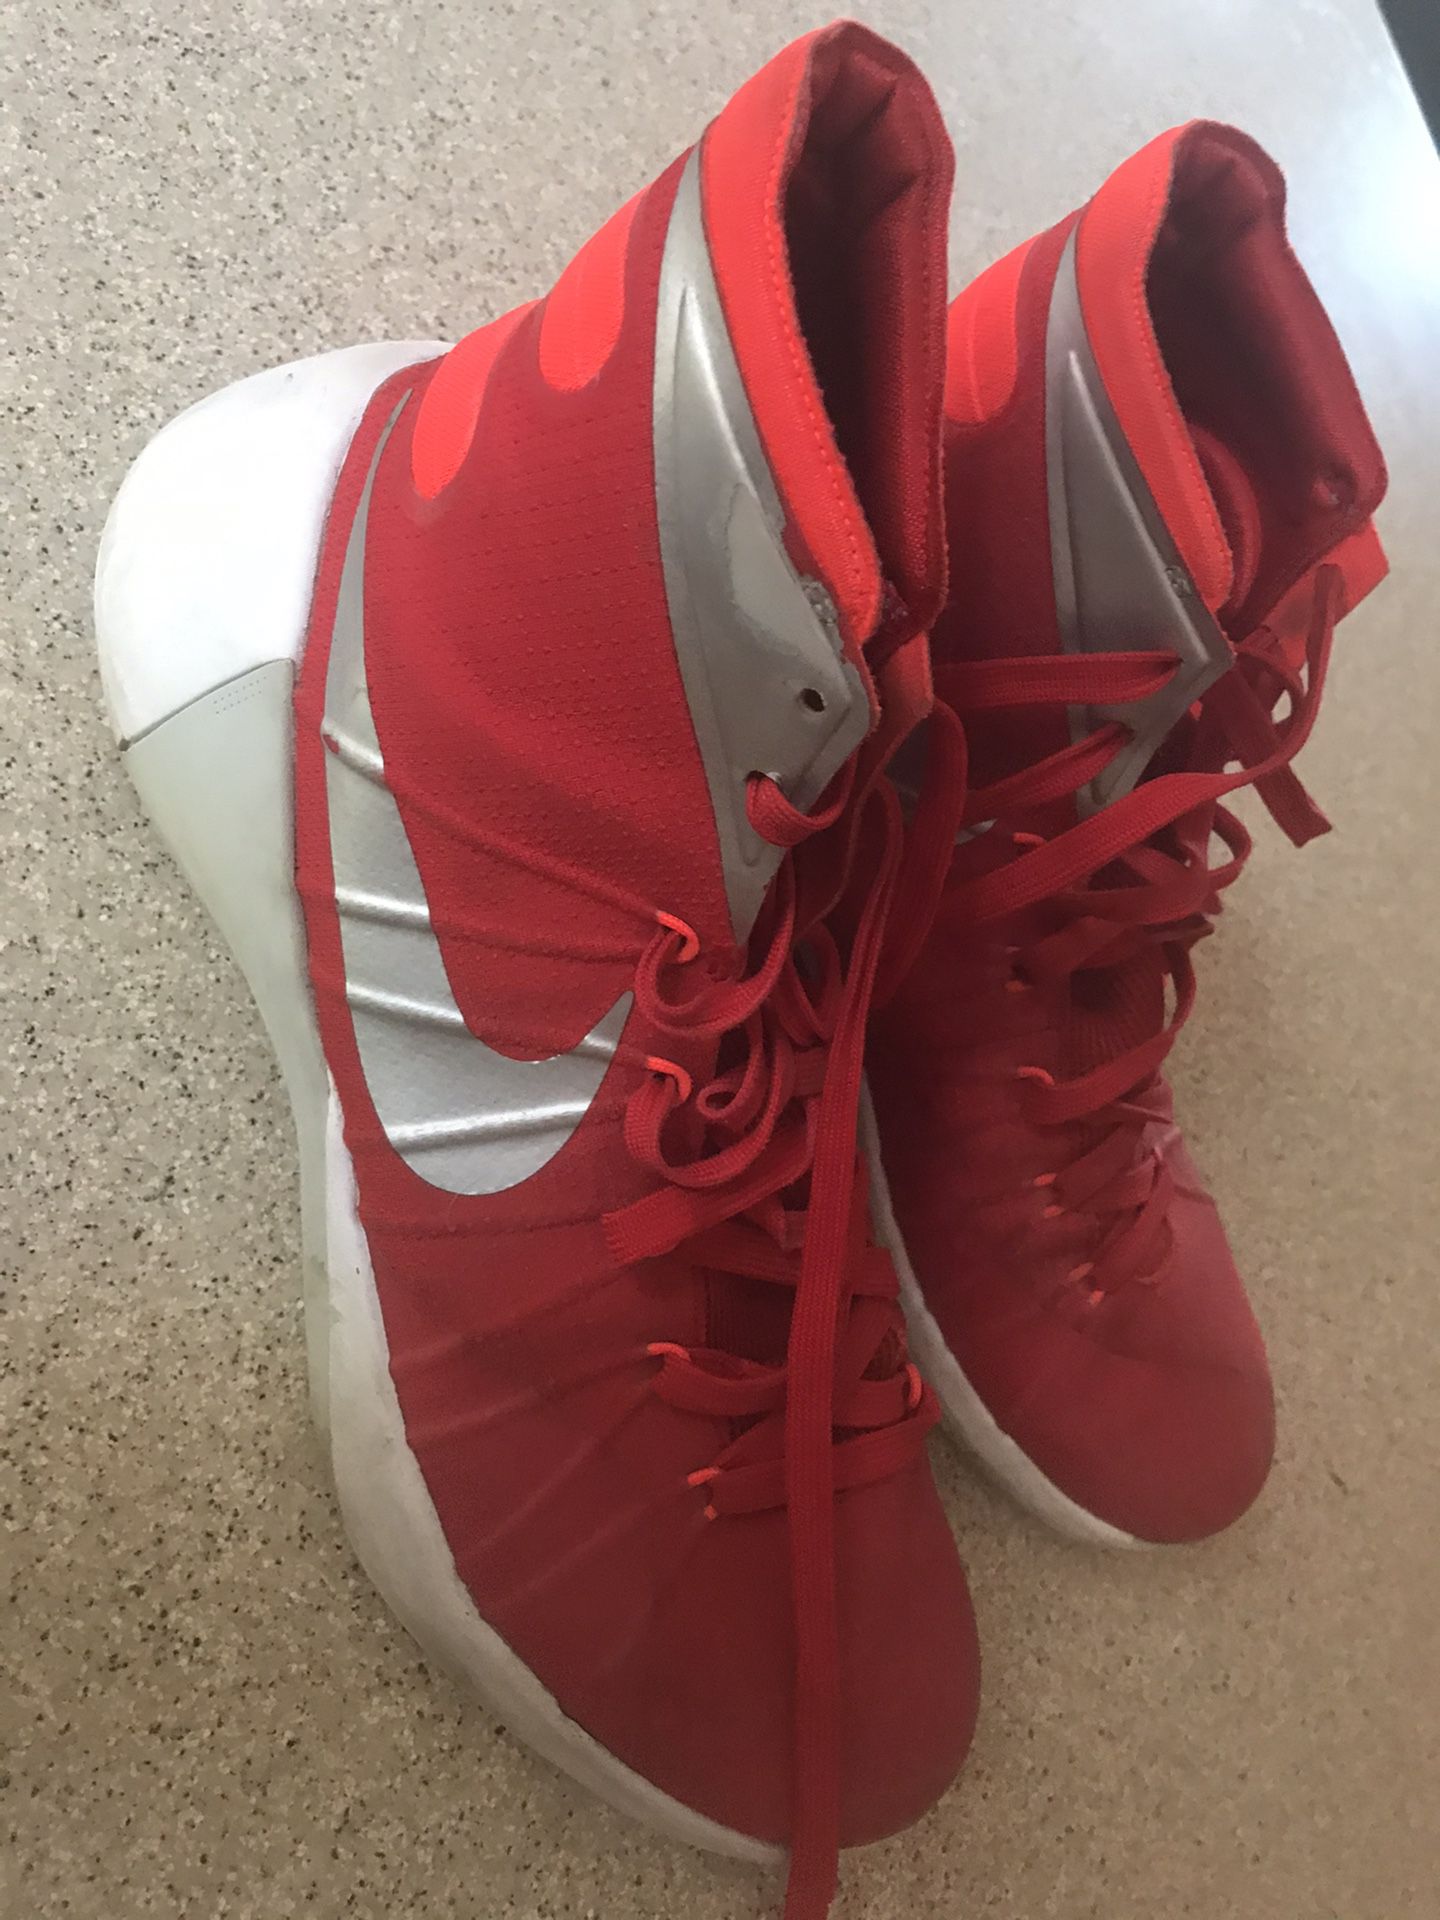 Nike basketball men’s shoes size 9.5